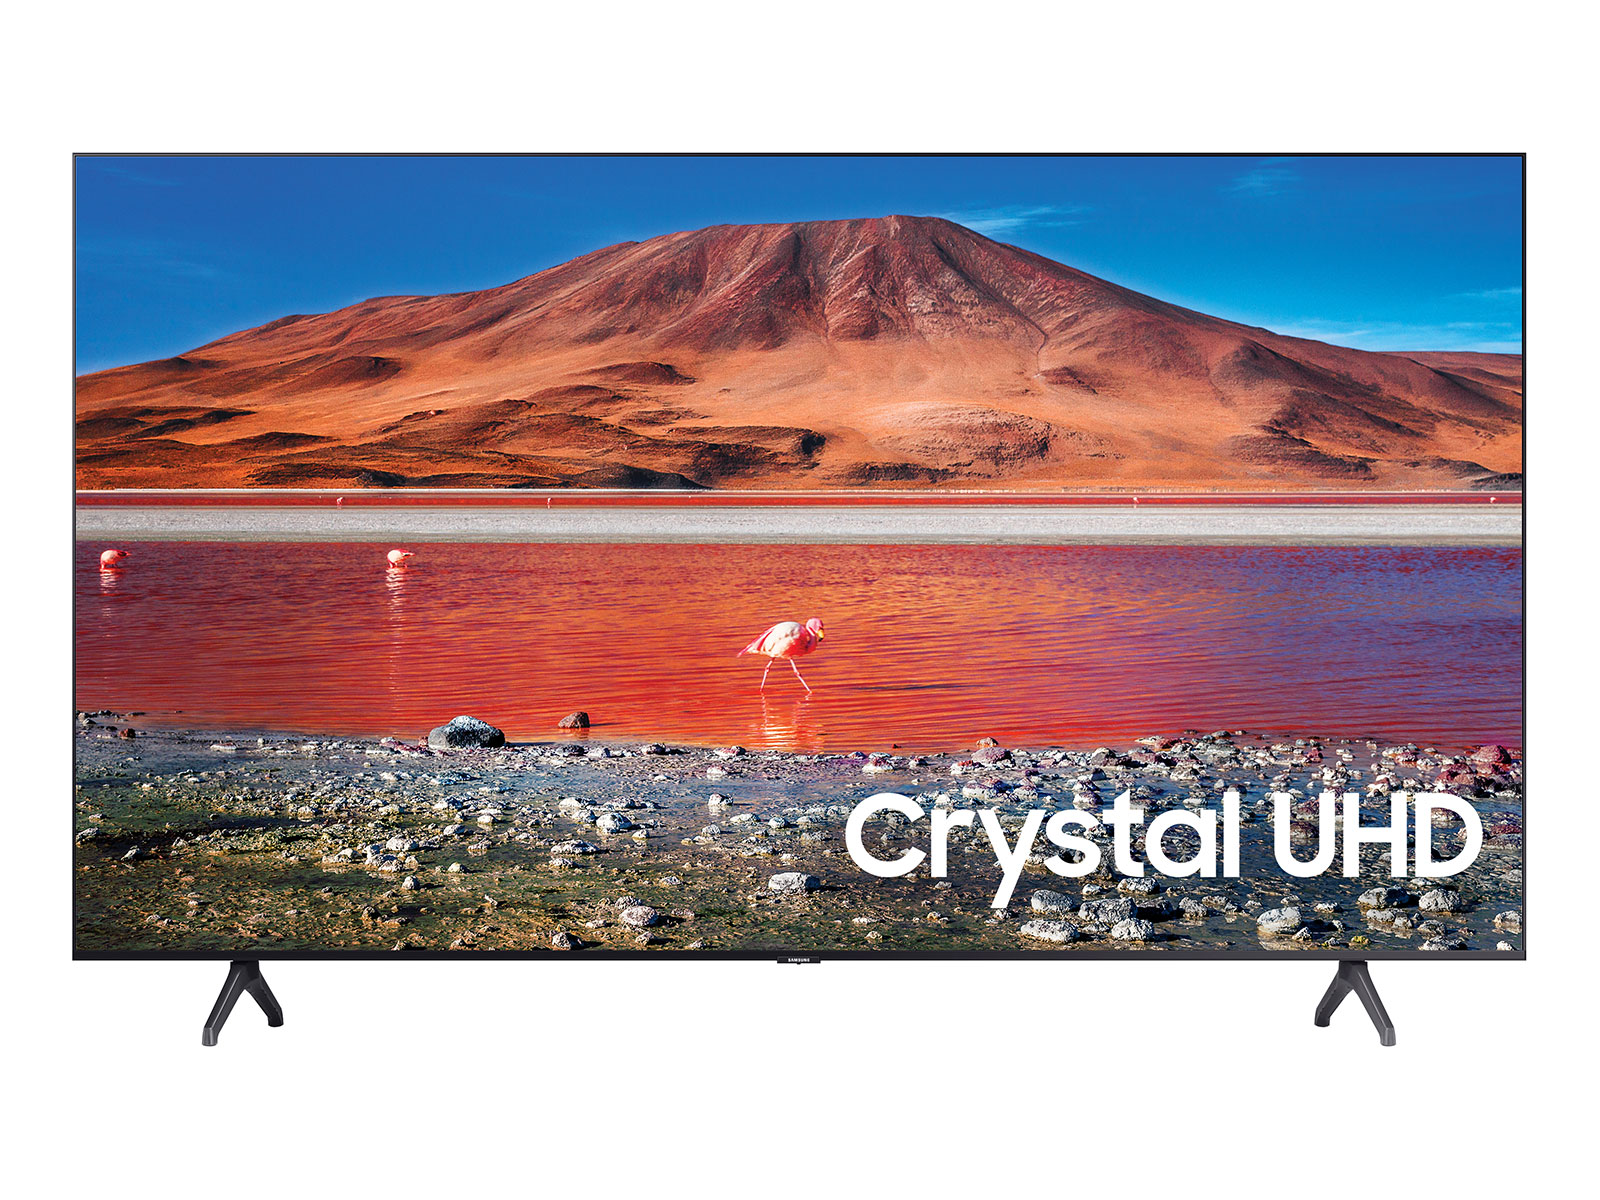 43” Class TU7000 Crystal UHD 4K Smart TV (2020)